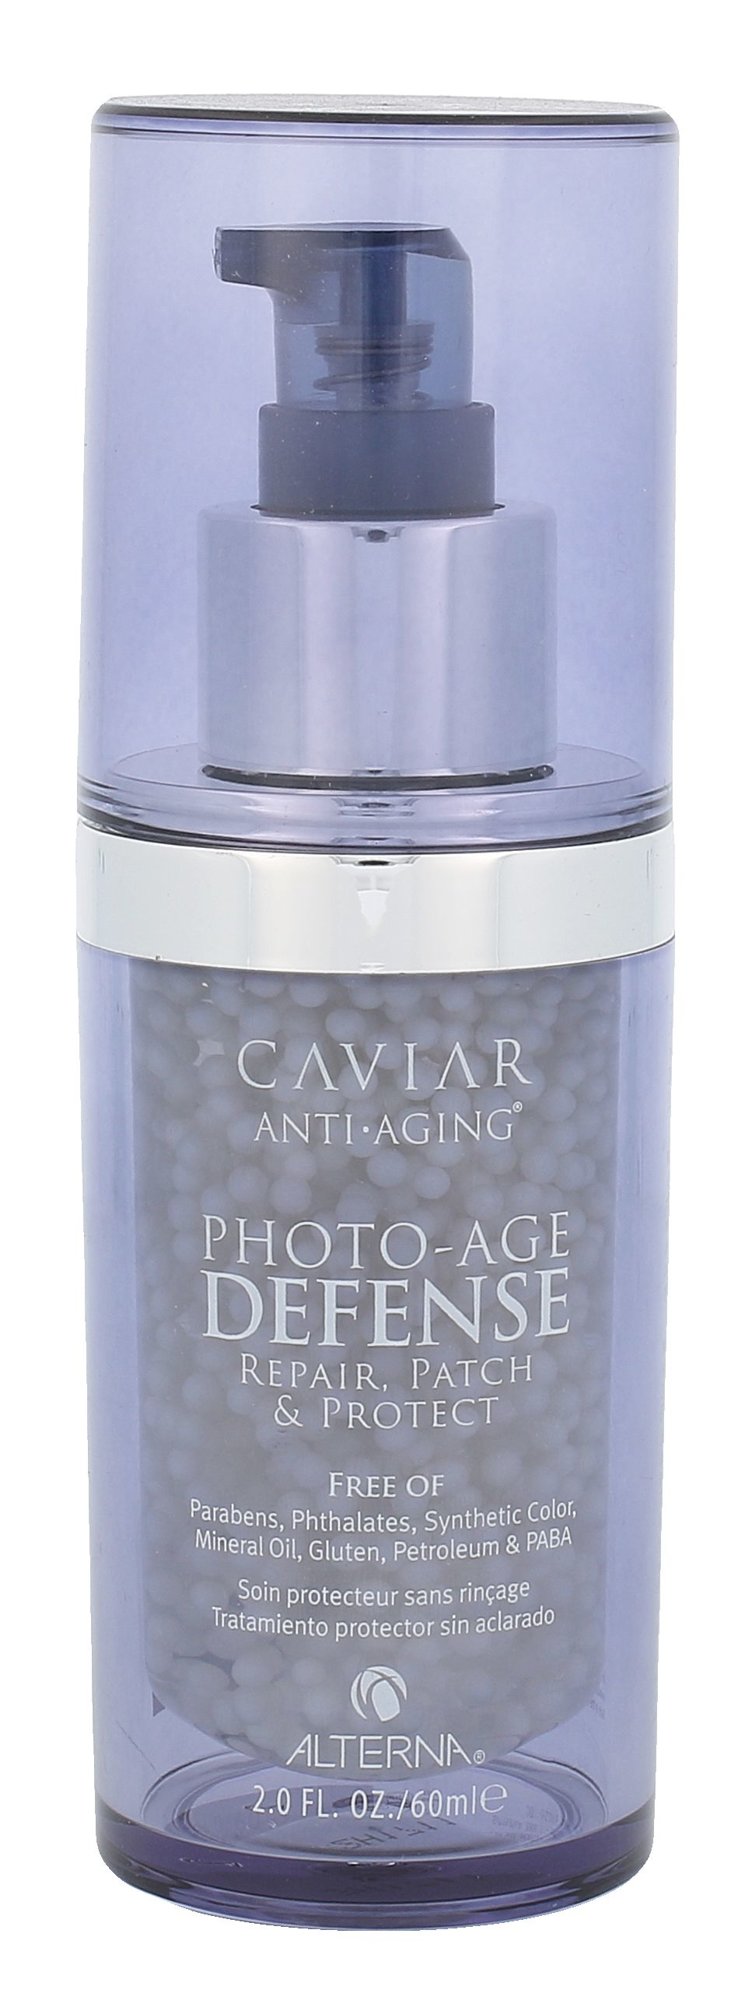 Alterna Caviar Photo-Age Defense